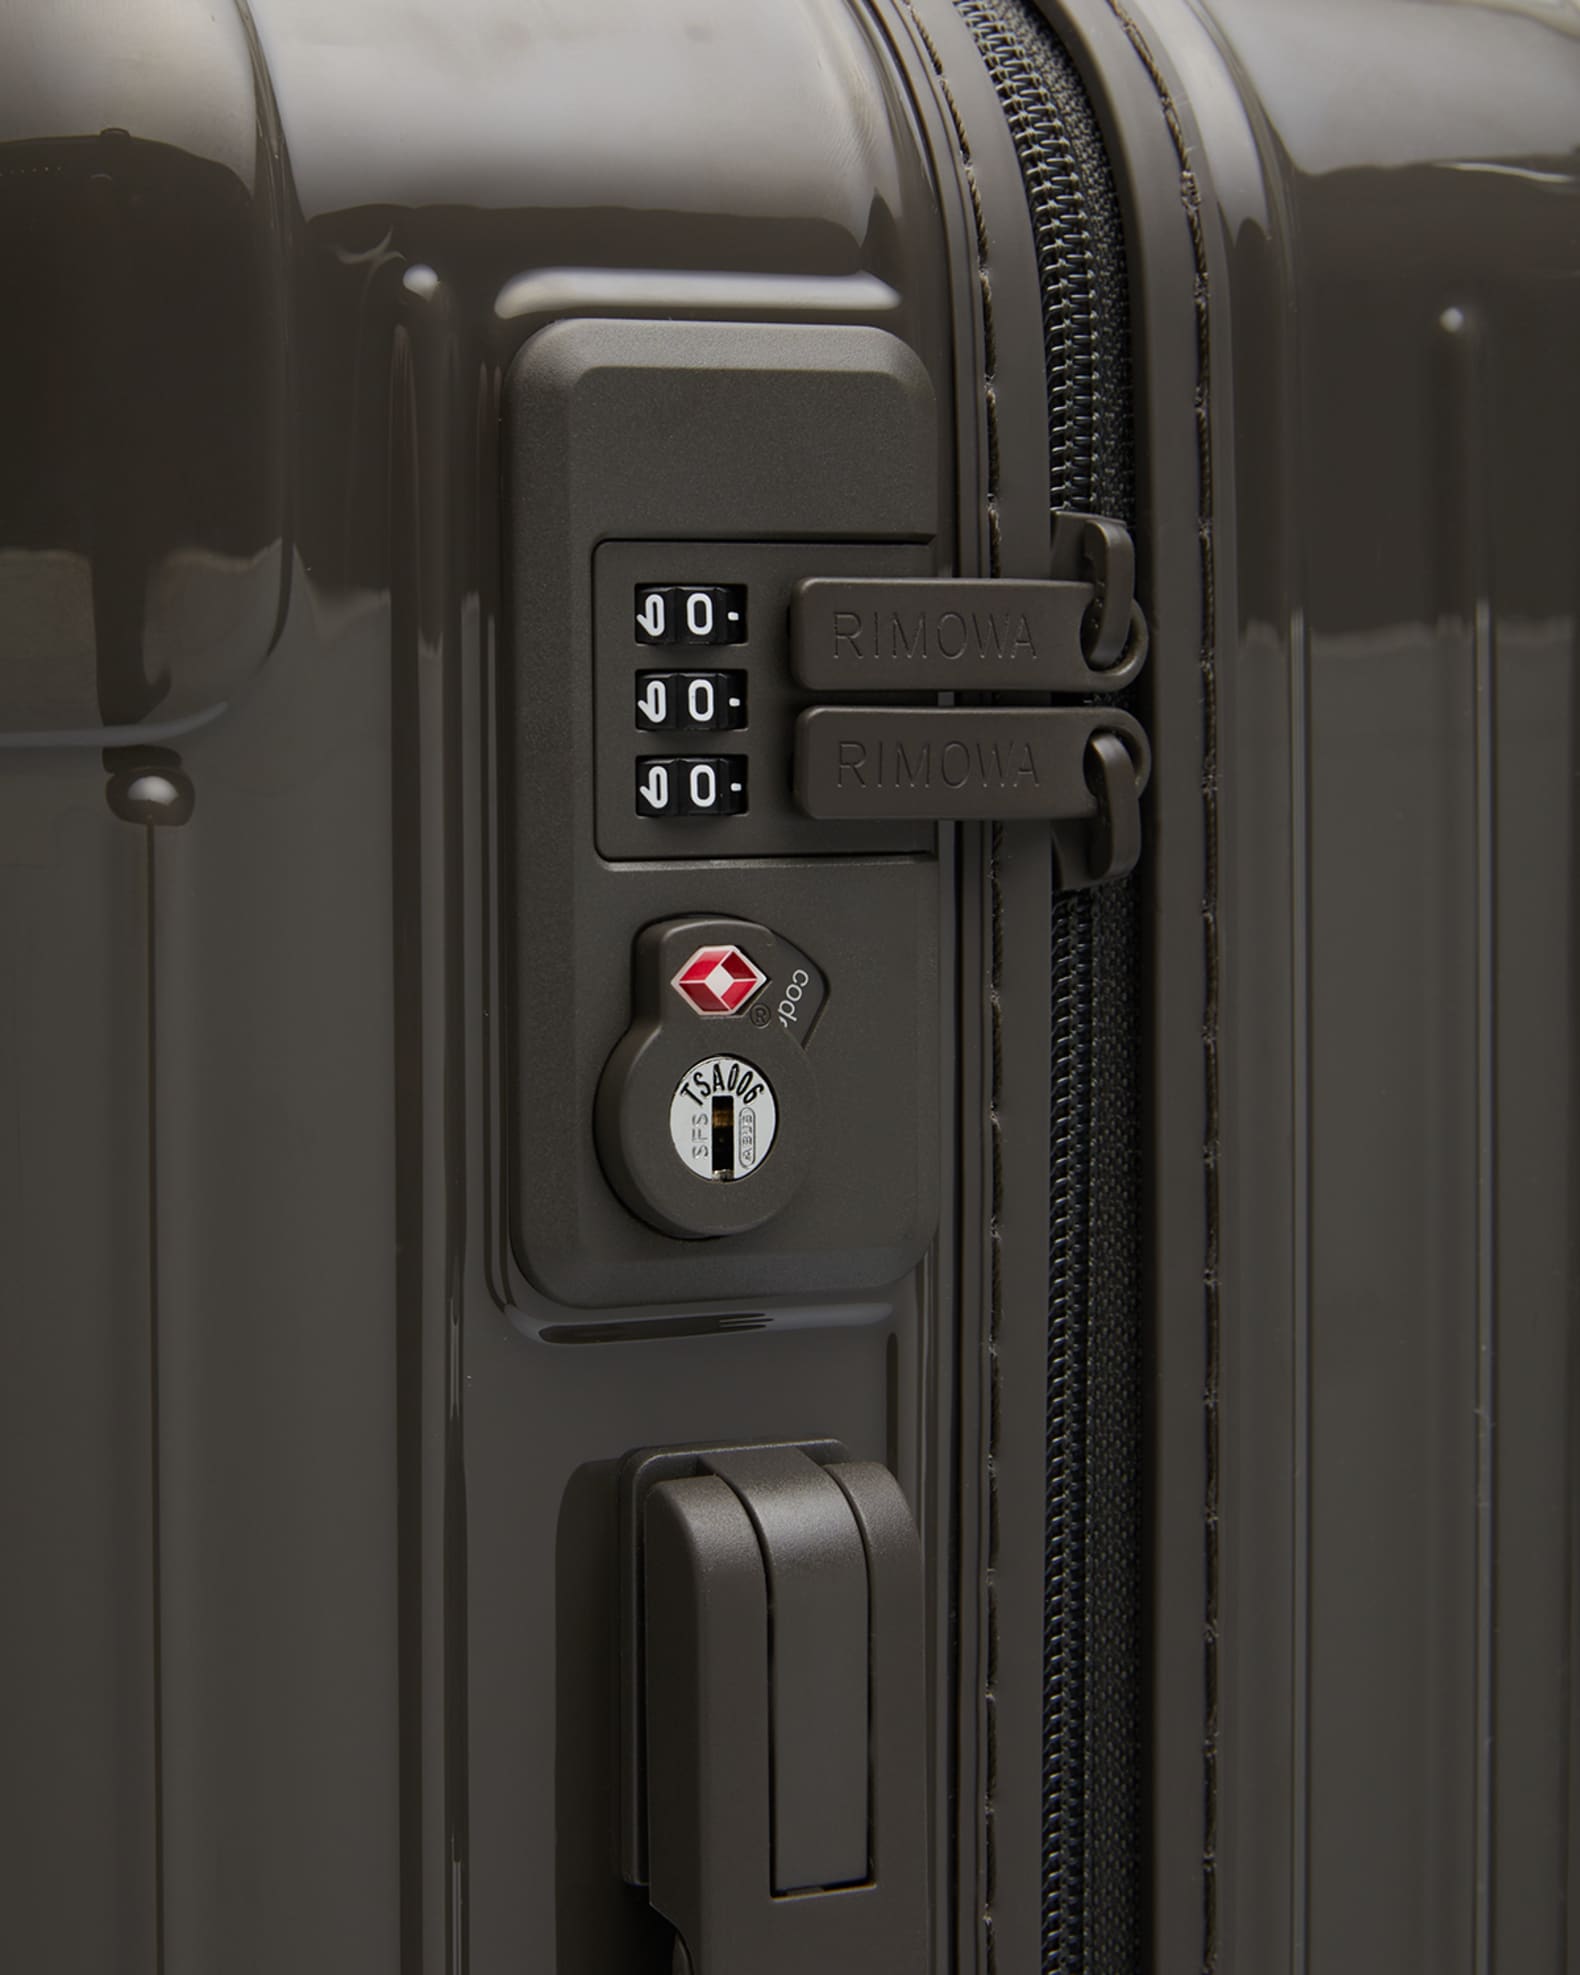 Rimowa Essential Sleeve Cabin Suitcase - Black - Luggage